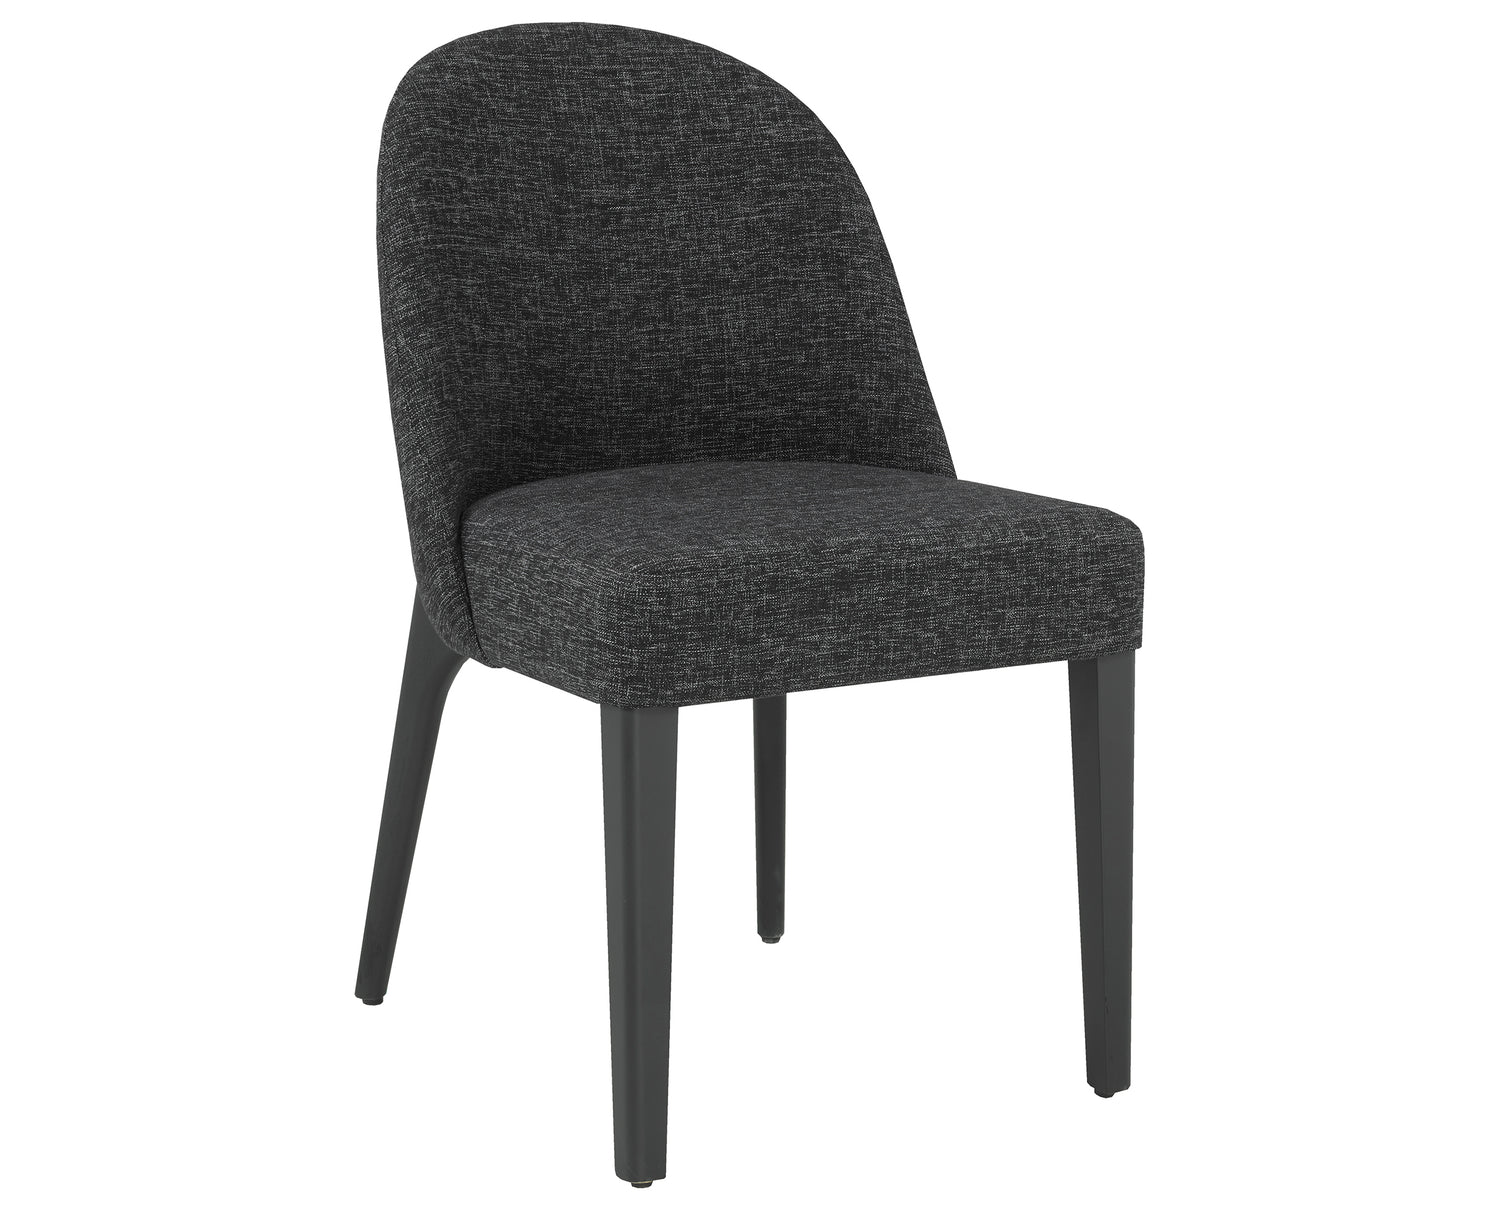 Chair as Shown | Cardinal Woodcraft Svene Dining Chair - Norwich | Valley Ridge Furniture